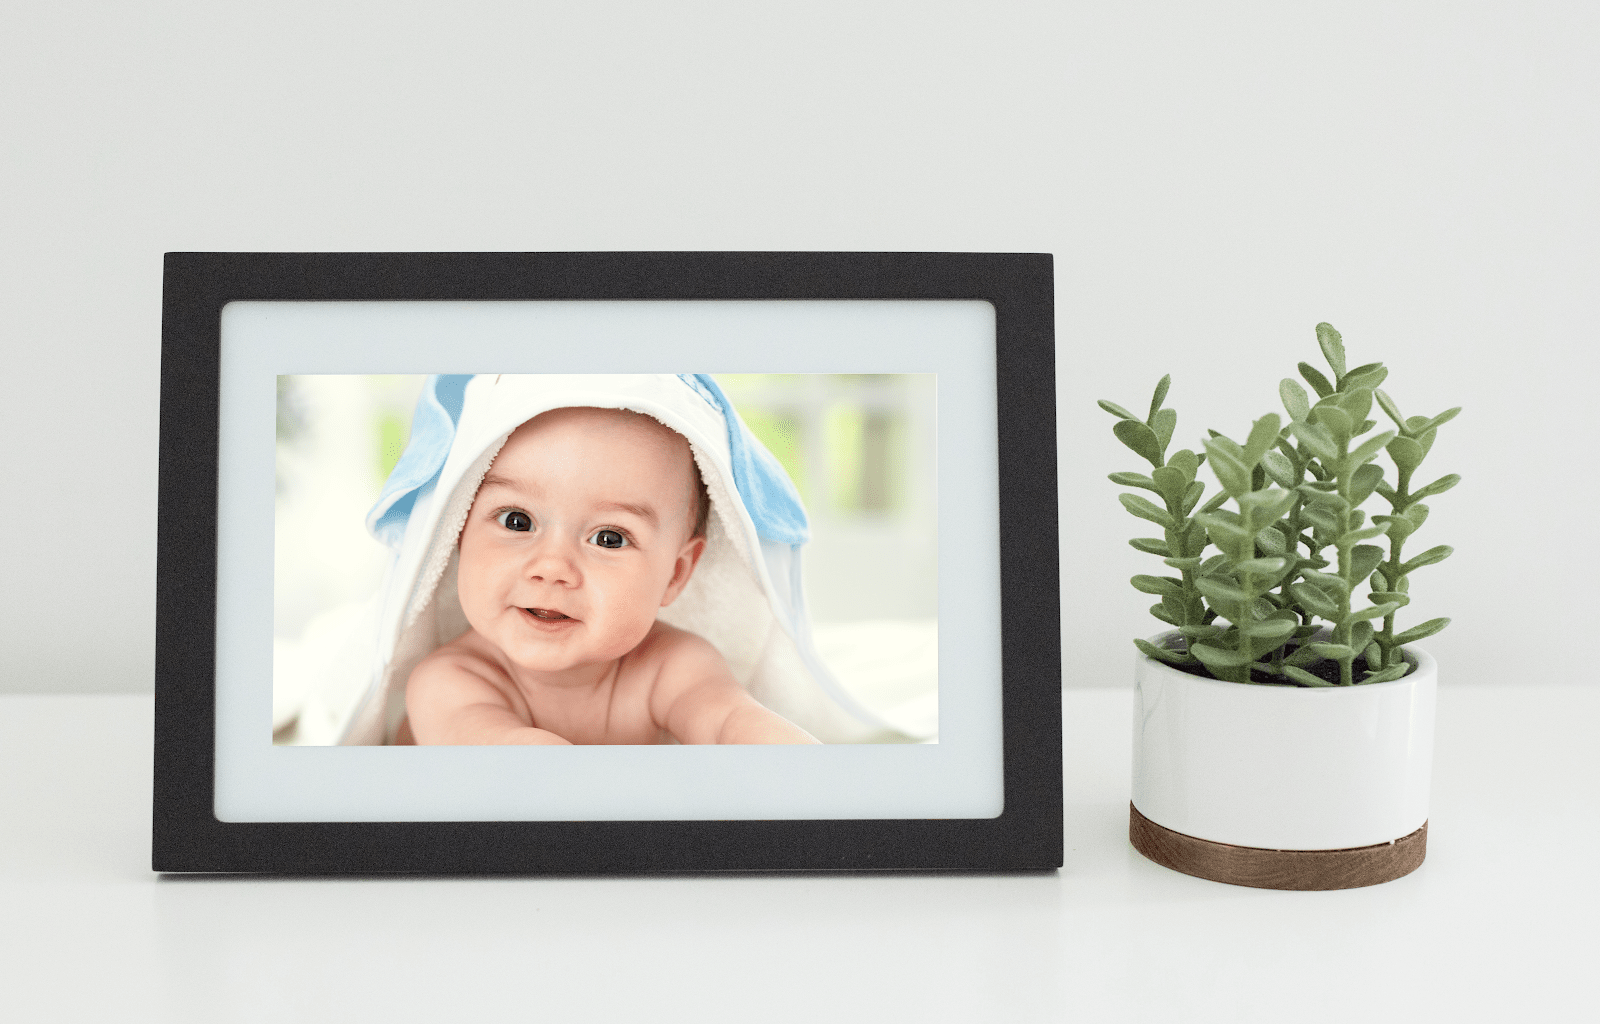 Cute baby displayed on digital photo frame